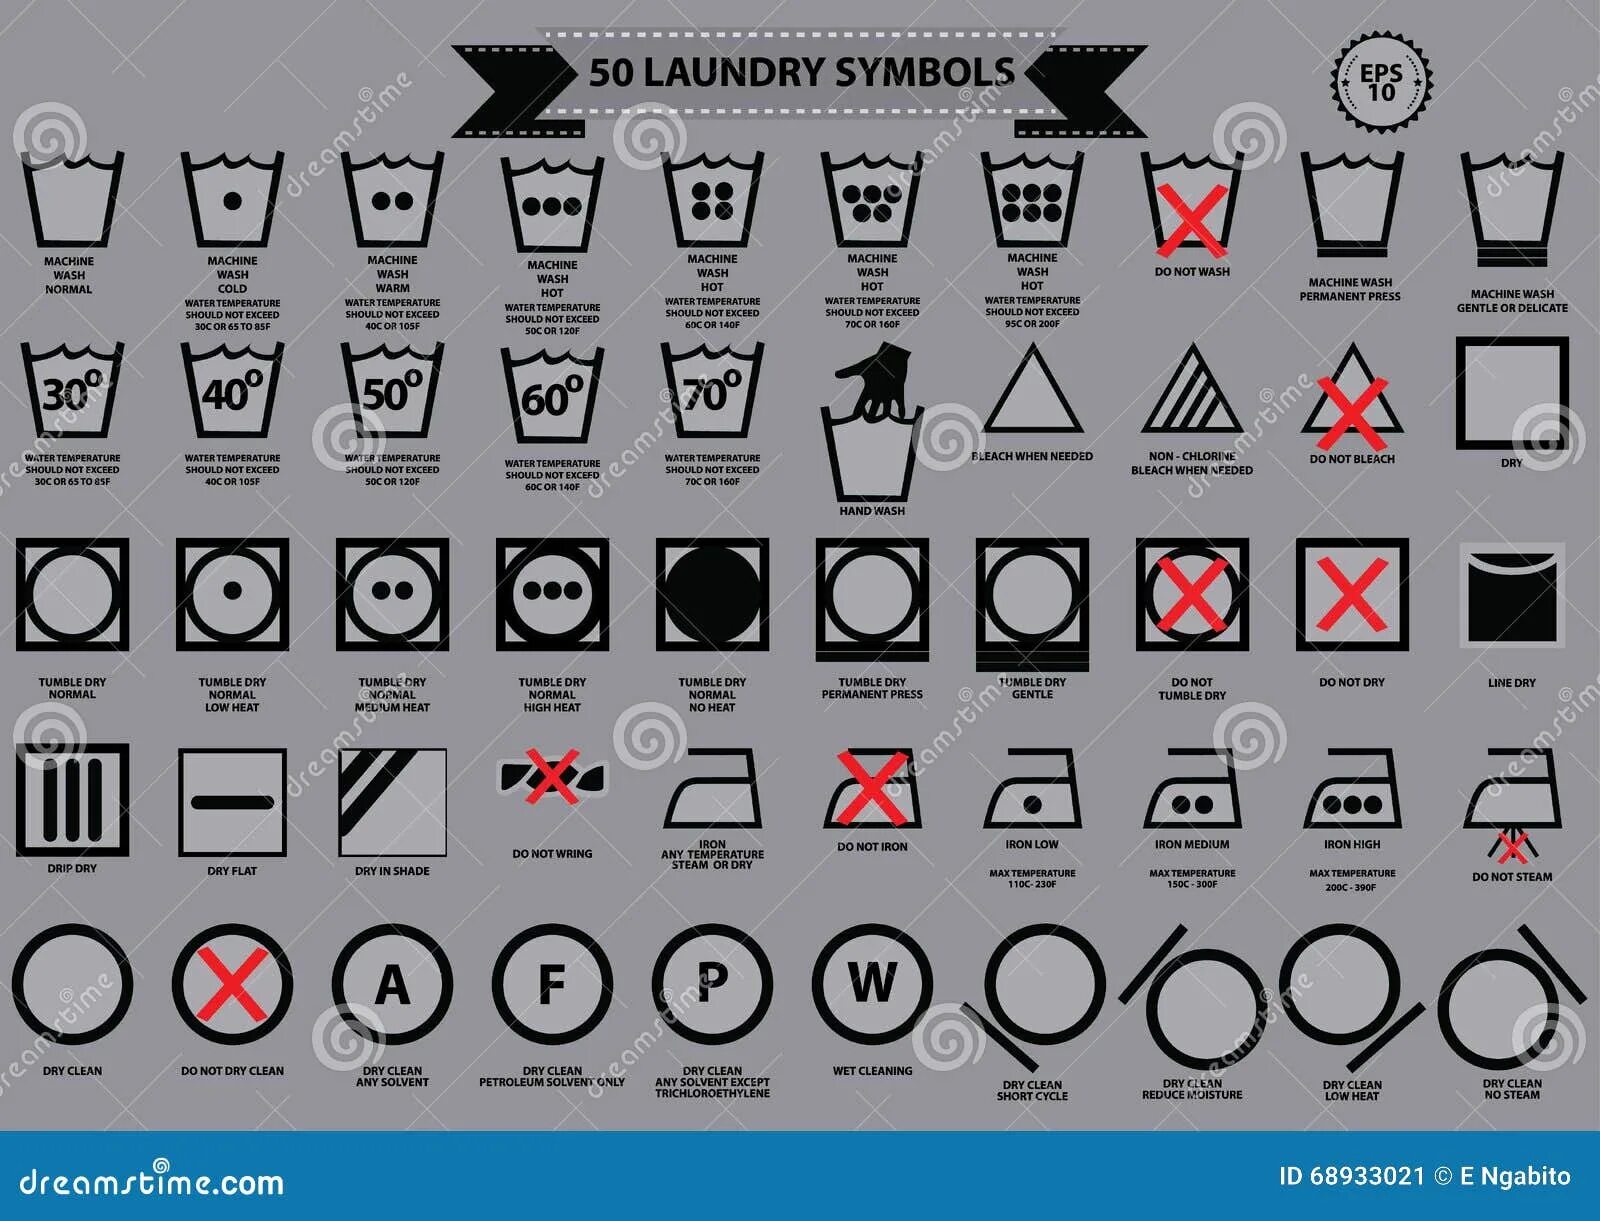 Do not dry clean. Символы по уходу за текстильными изделиями. Don't Dry clean на одежде. Dry Flat на одежде. Washing Machine символы.